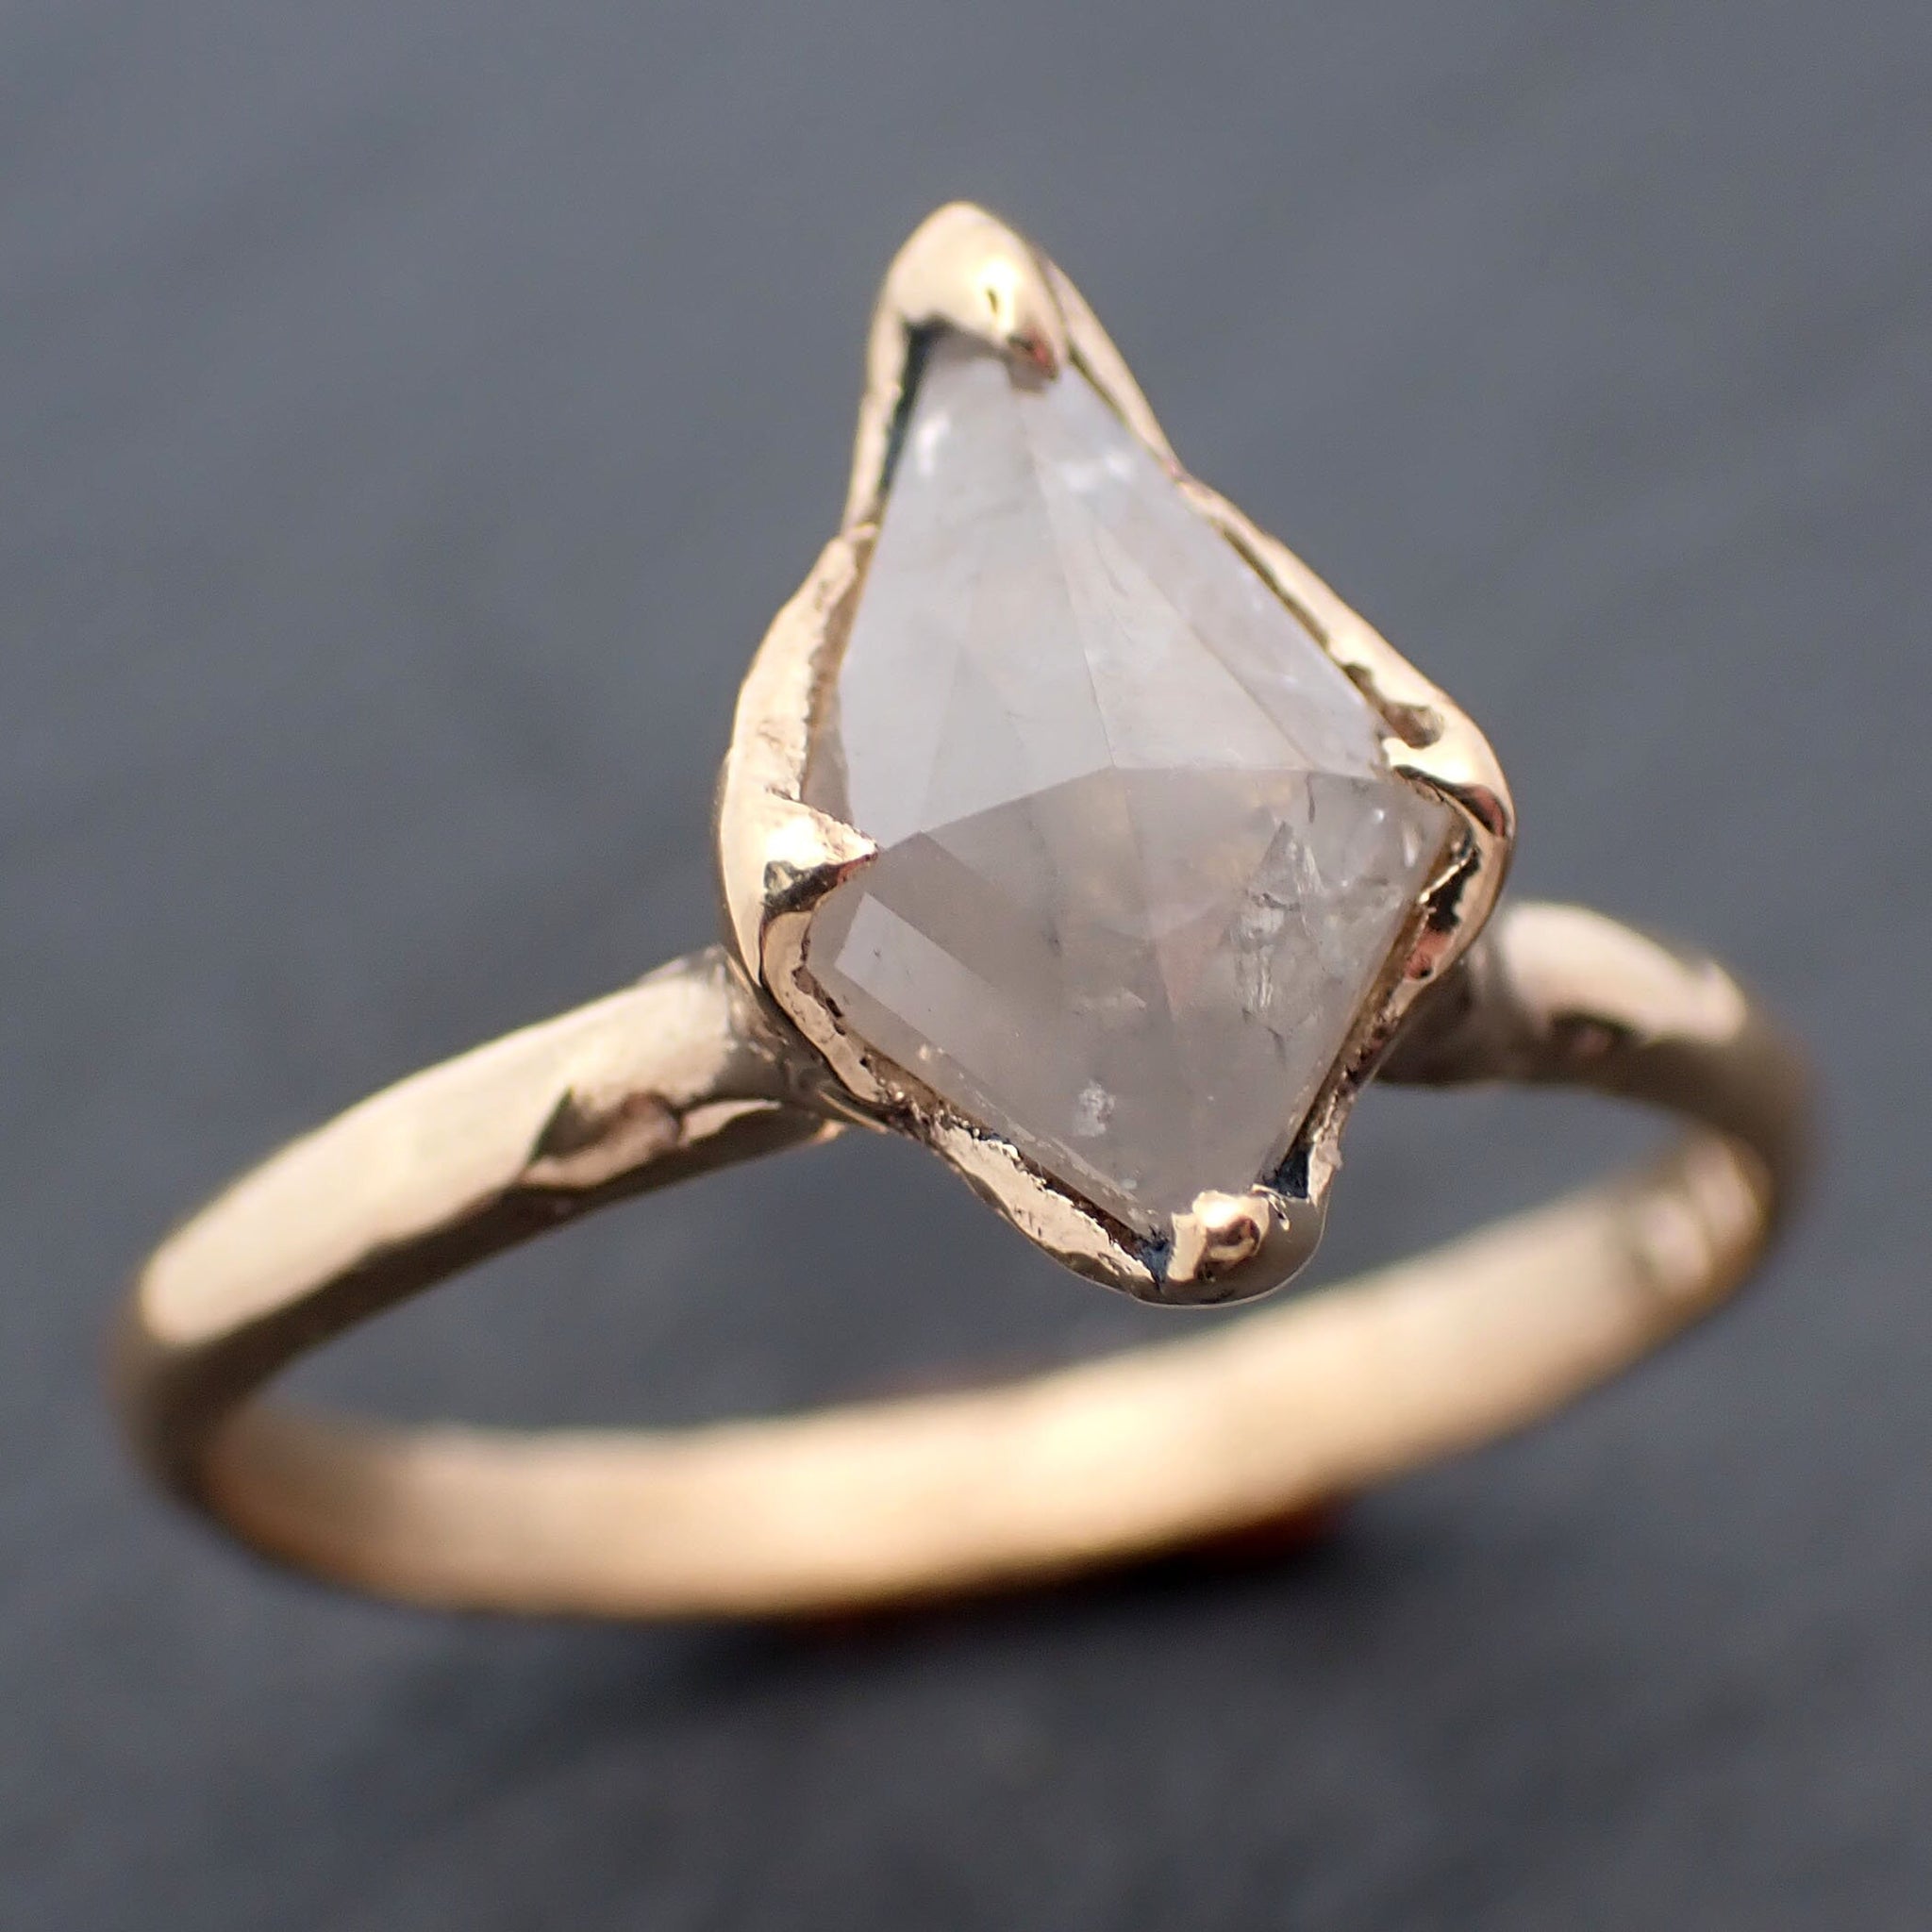 Fancy cut white Diamond Solitaire Engagement 18k yellow Gold Wedding Ring byAngeline 3284